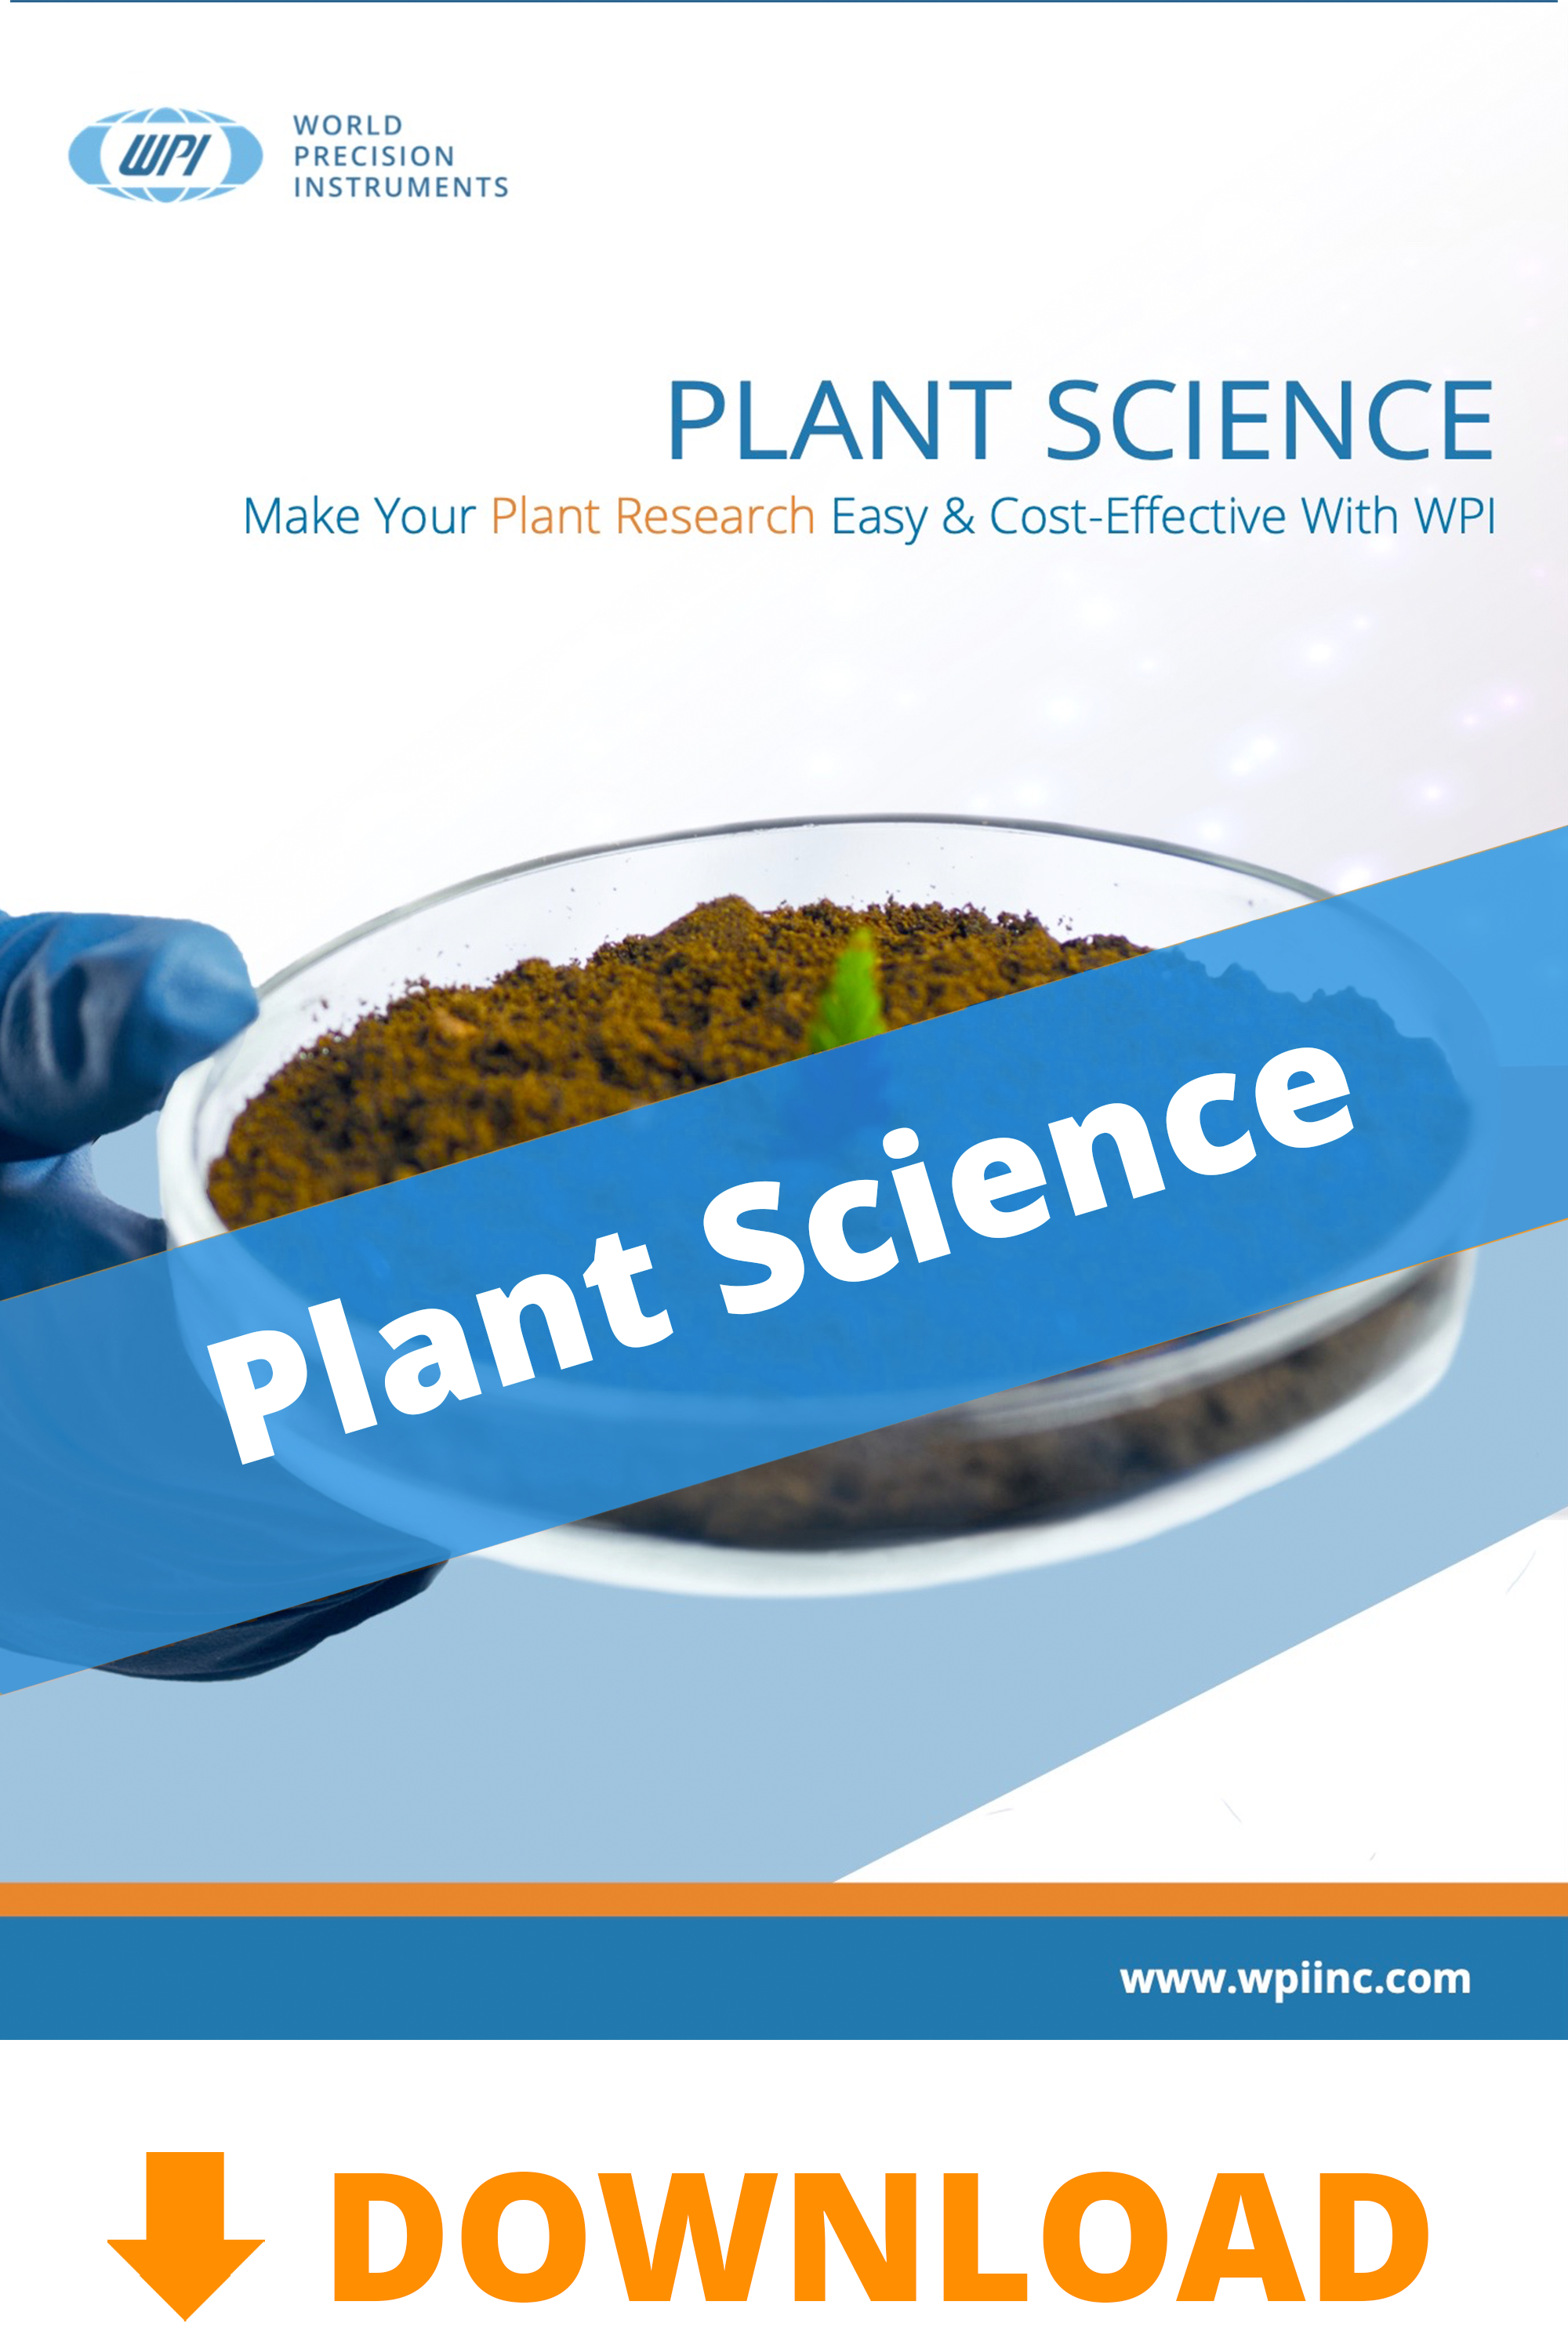 Download the Plant Sciences Application brochure